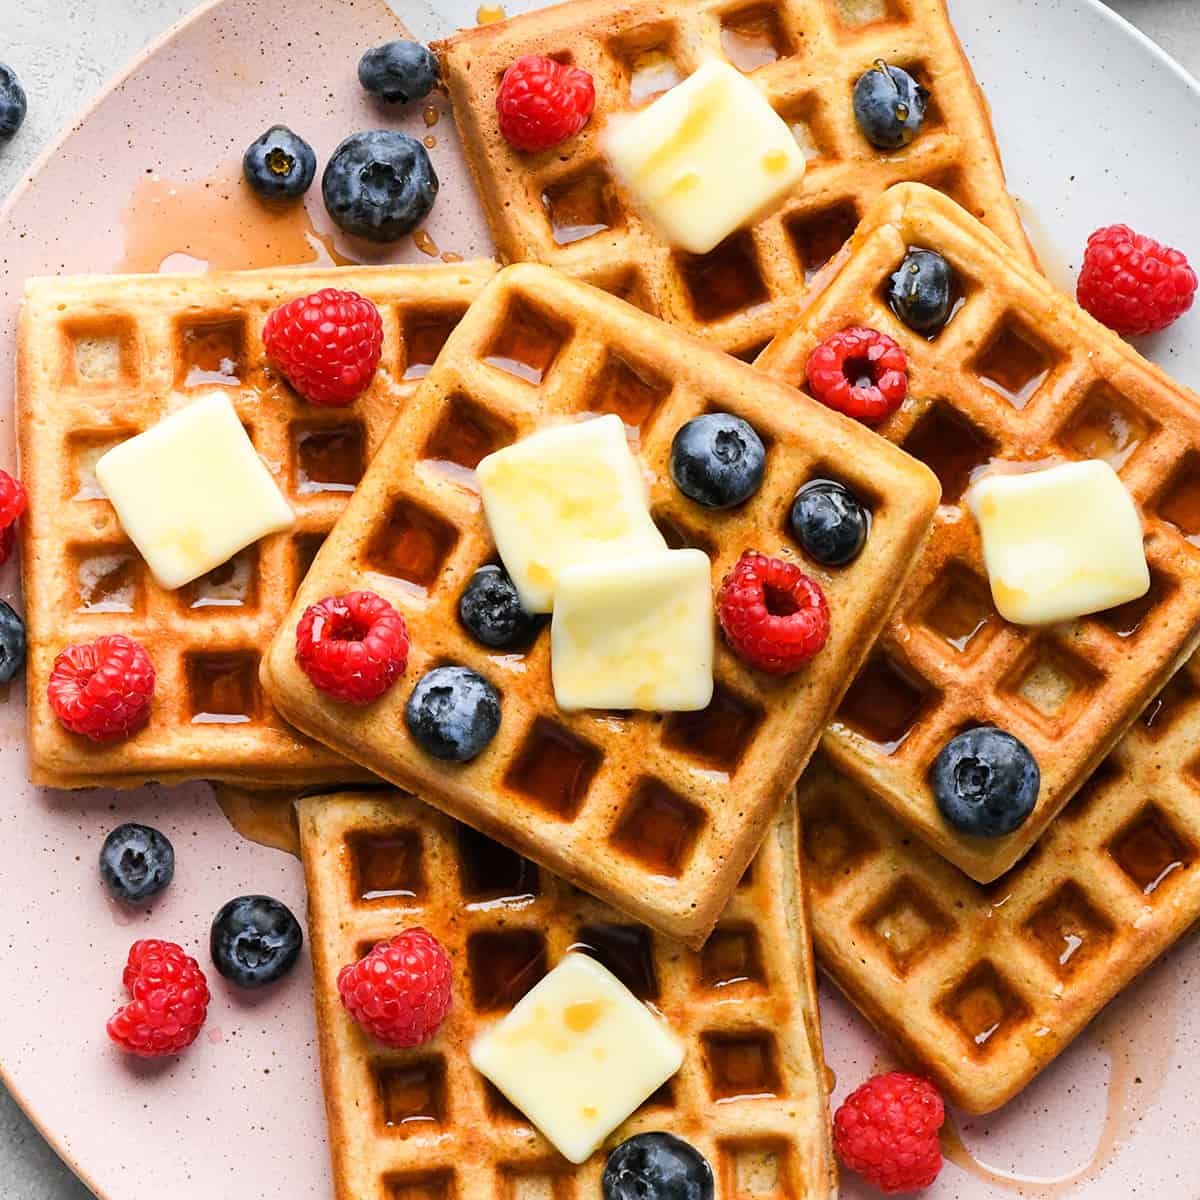 Healthy Breakfast Ideas homemade waffles